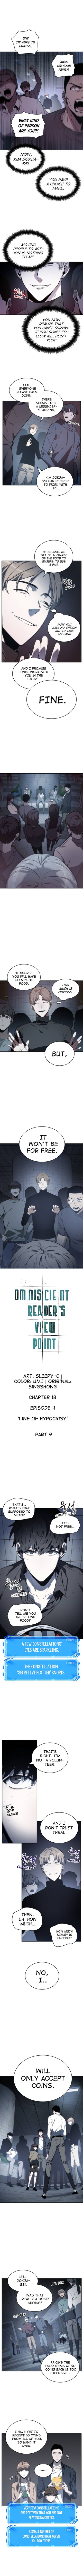 omniscient reader chapter